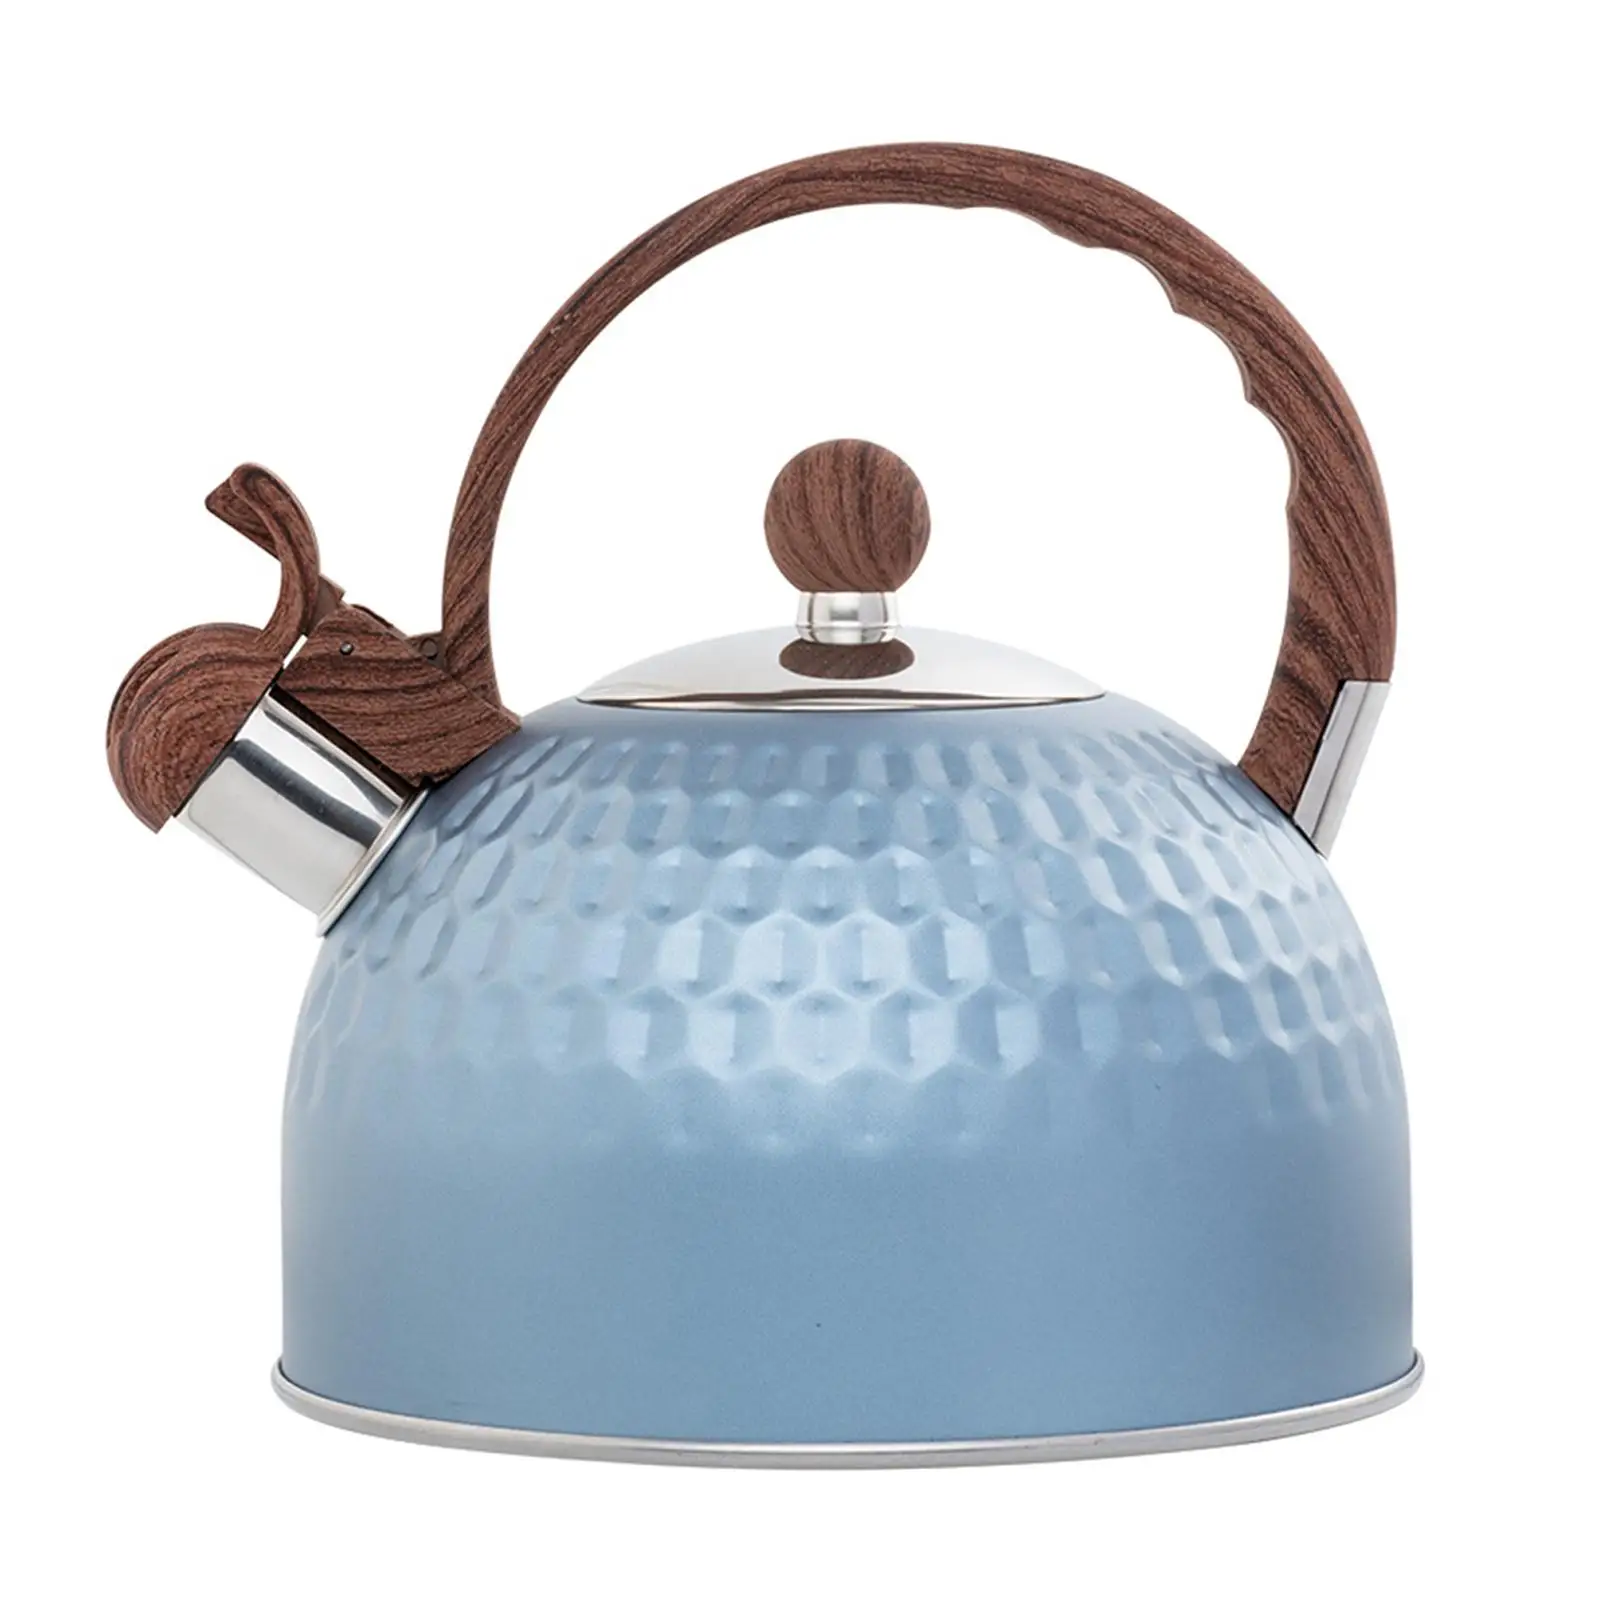 Household Whistling Kettle Stainless Steel Picnic Tea Pot 2.5L Large Capacity